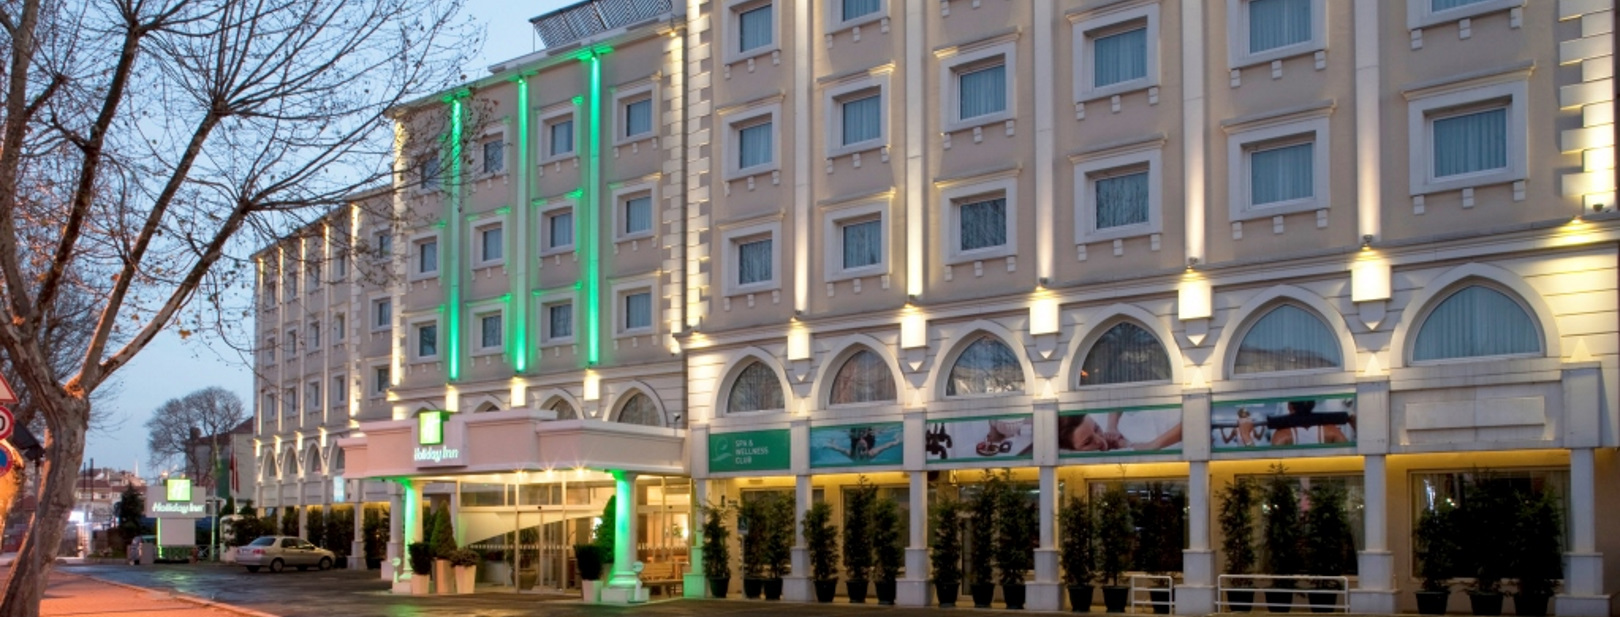 Turquie - Istanbul - Hôtel Holiday Inn City 5*